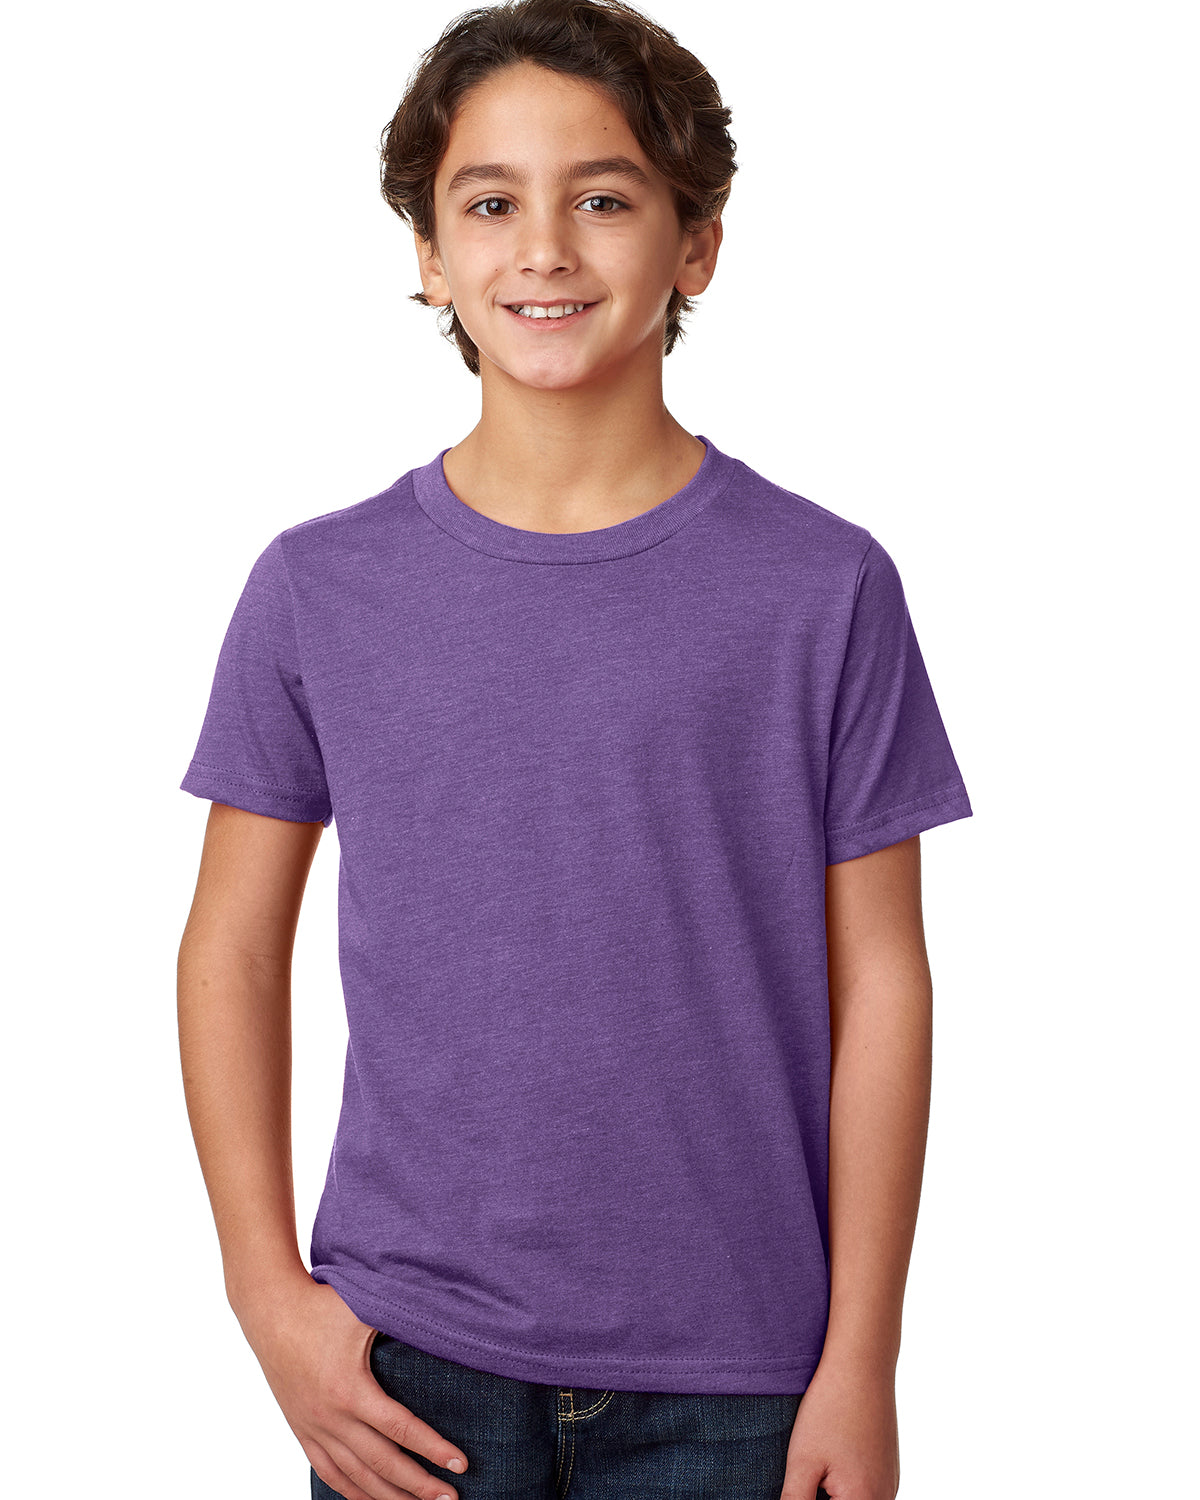 child model wearing next level youth CVC tee in purple rush